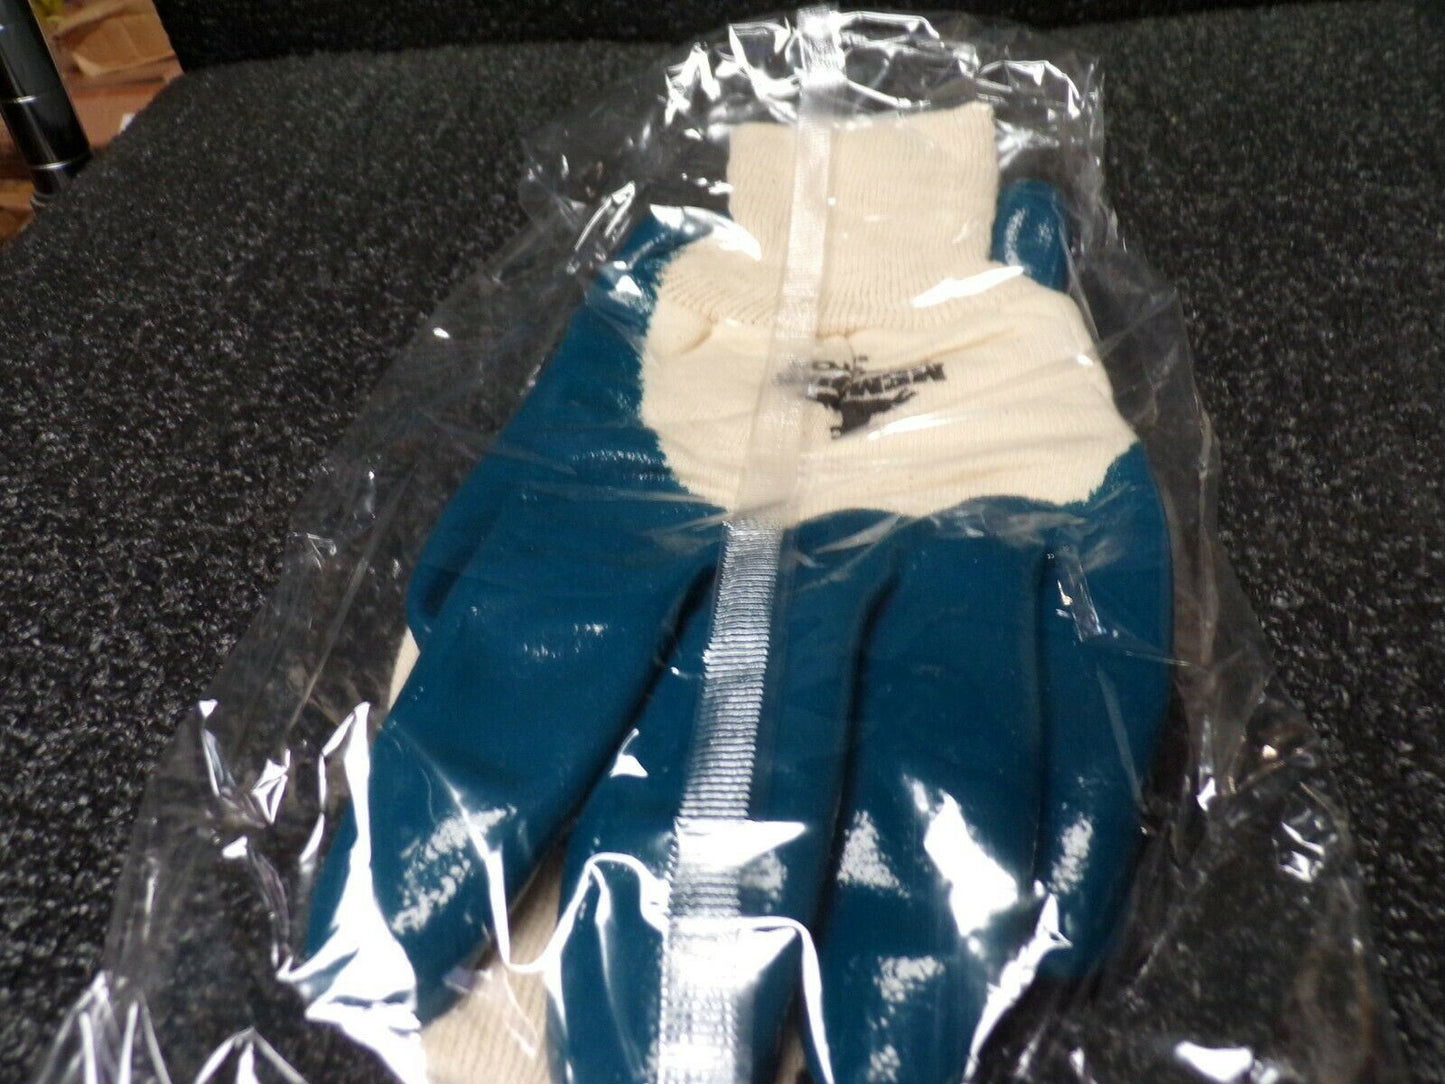 Memphis Predator Premium Nitrile-Coated Gloves Blue/White Large 6 Pairs 9750 (183934091560-WTA02)